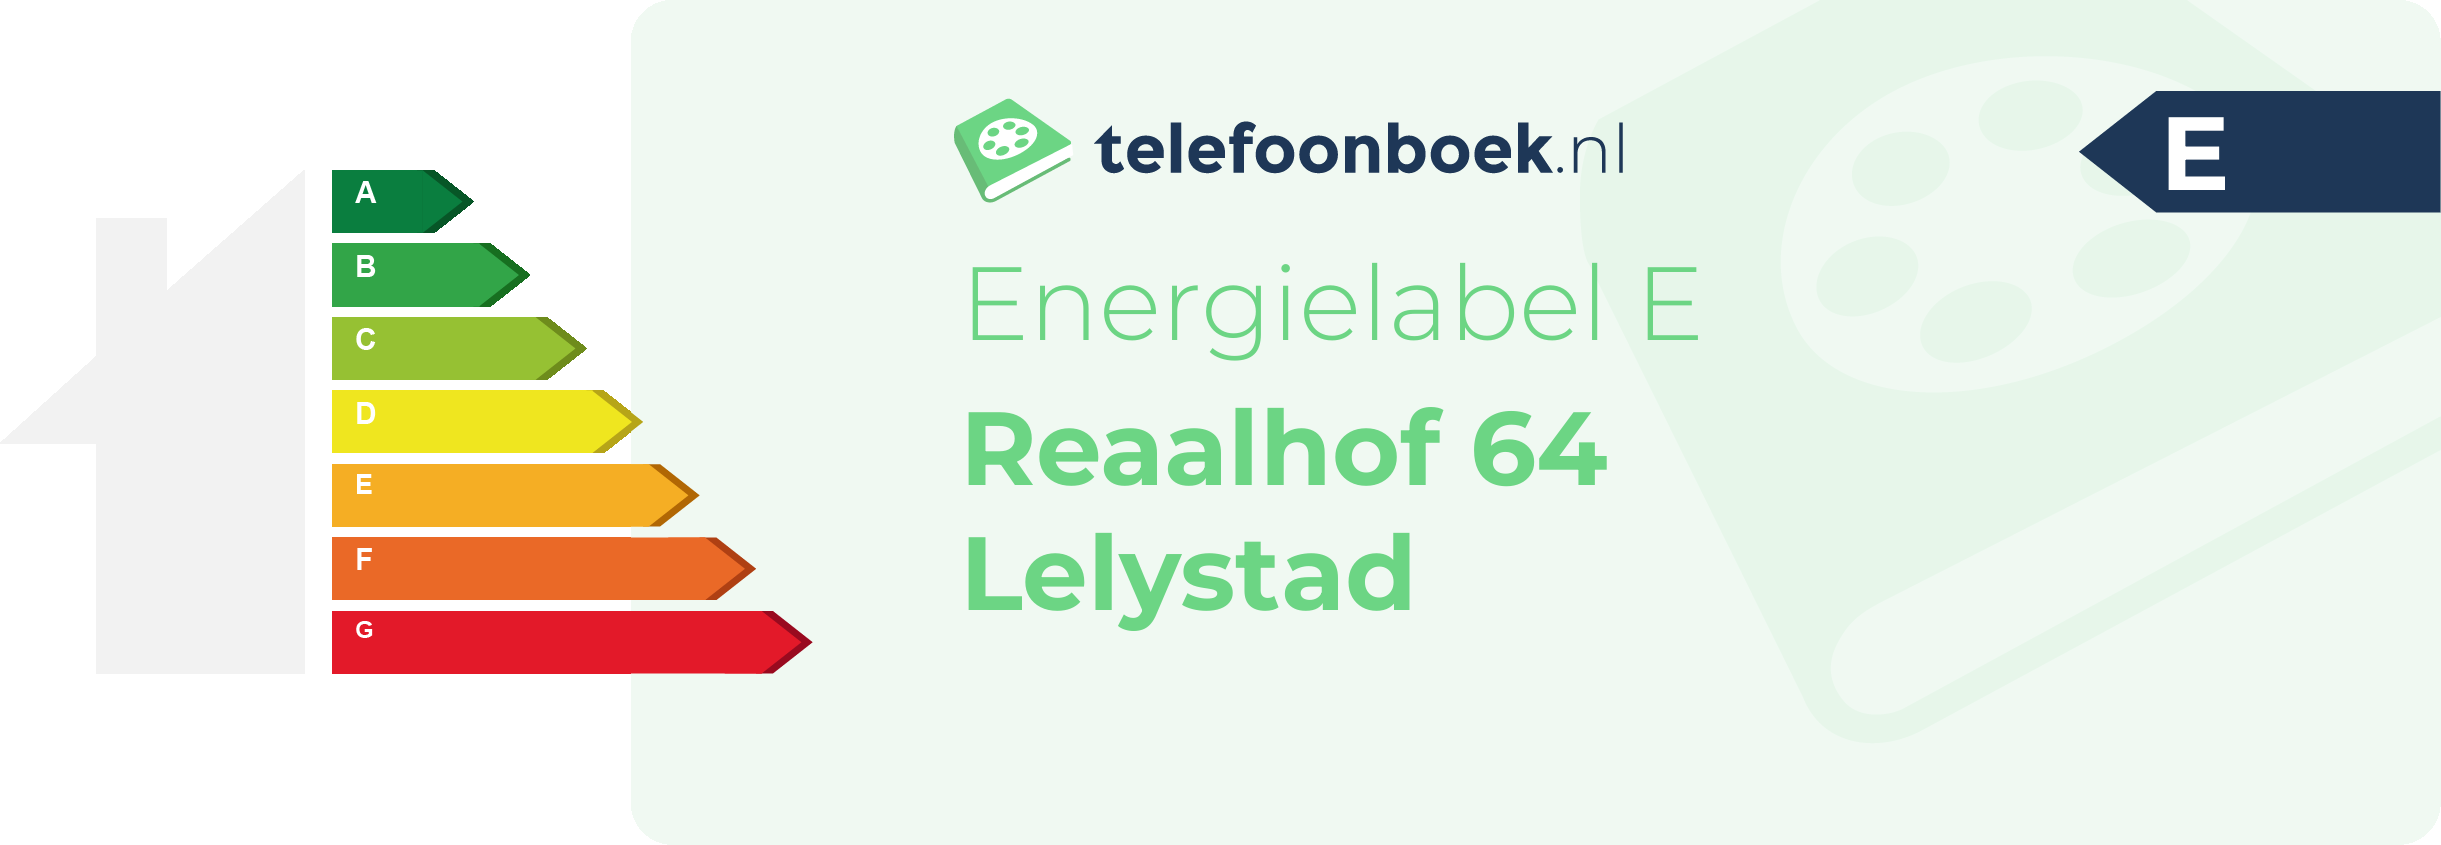 Energielabel Reaalhof 64 Lelystad